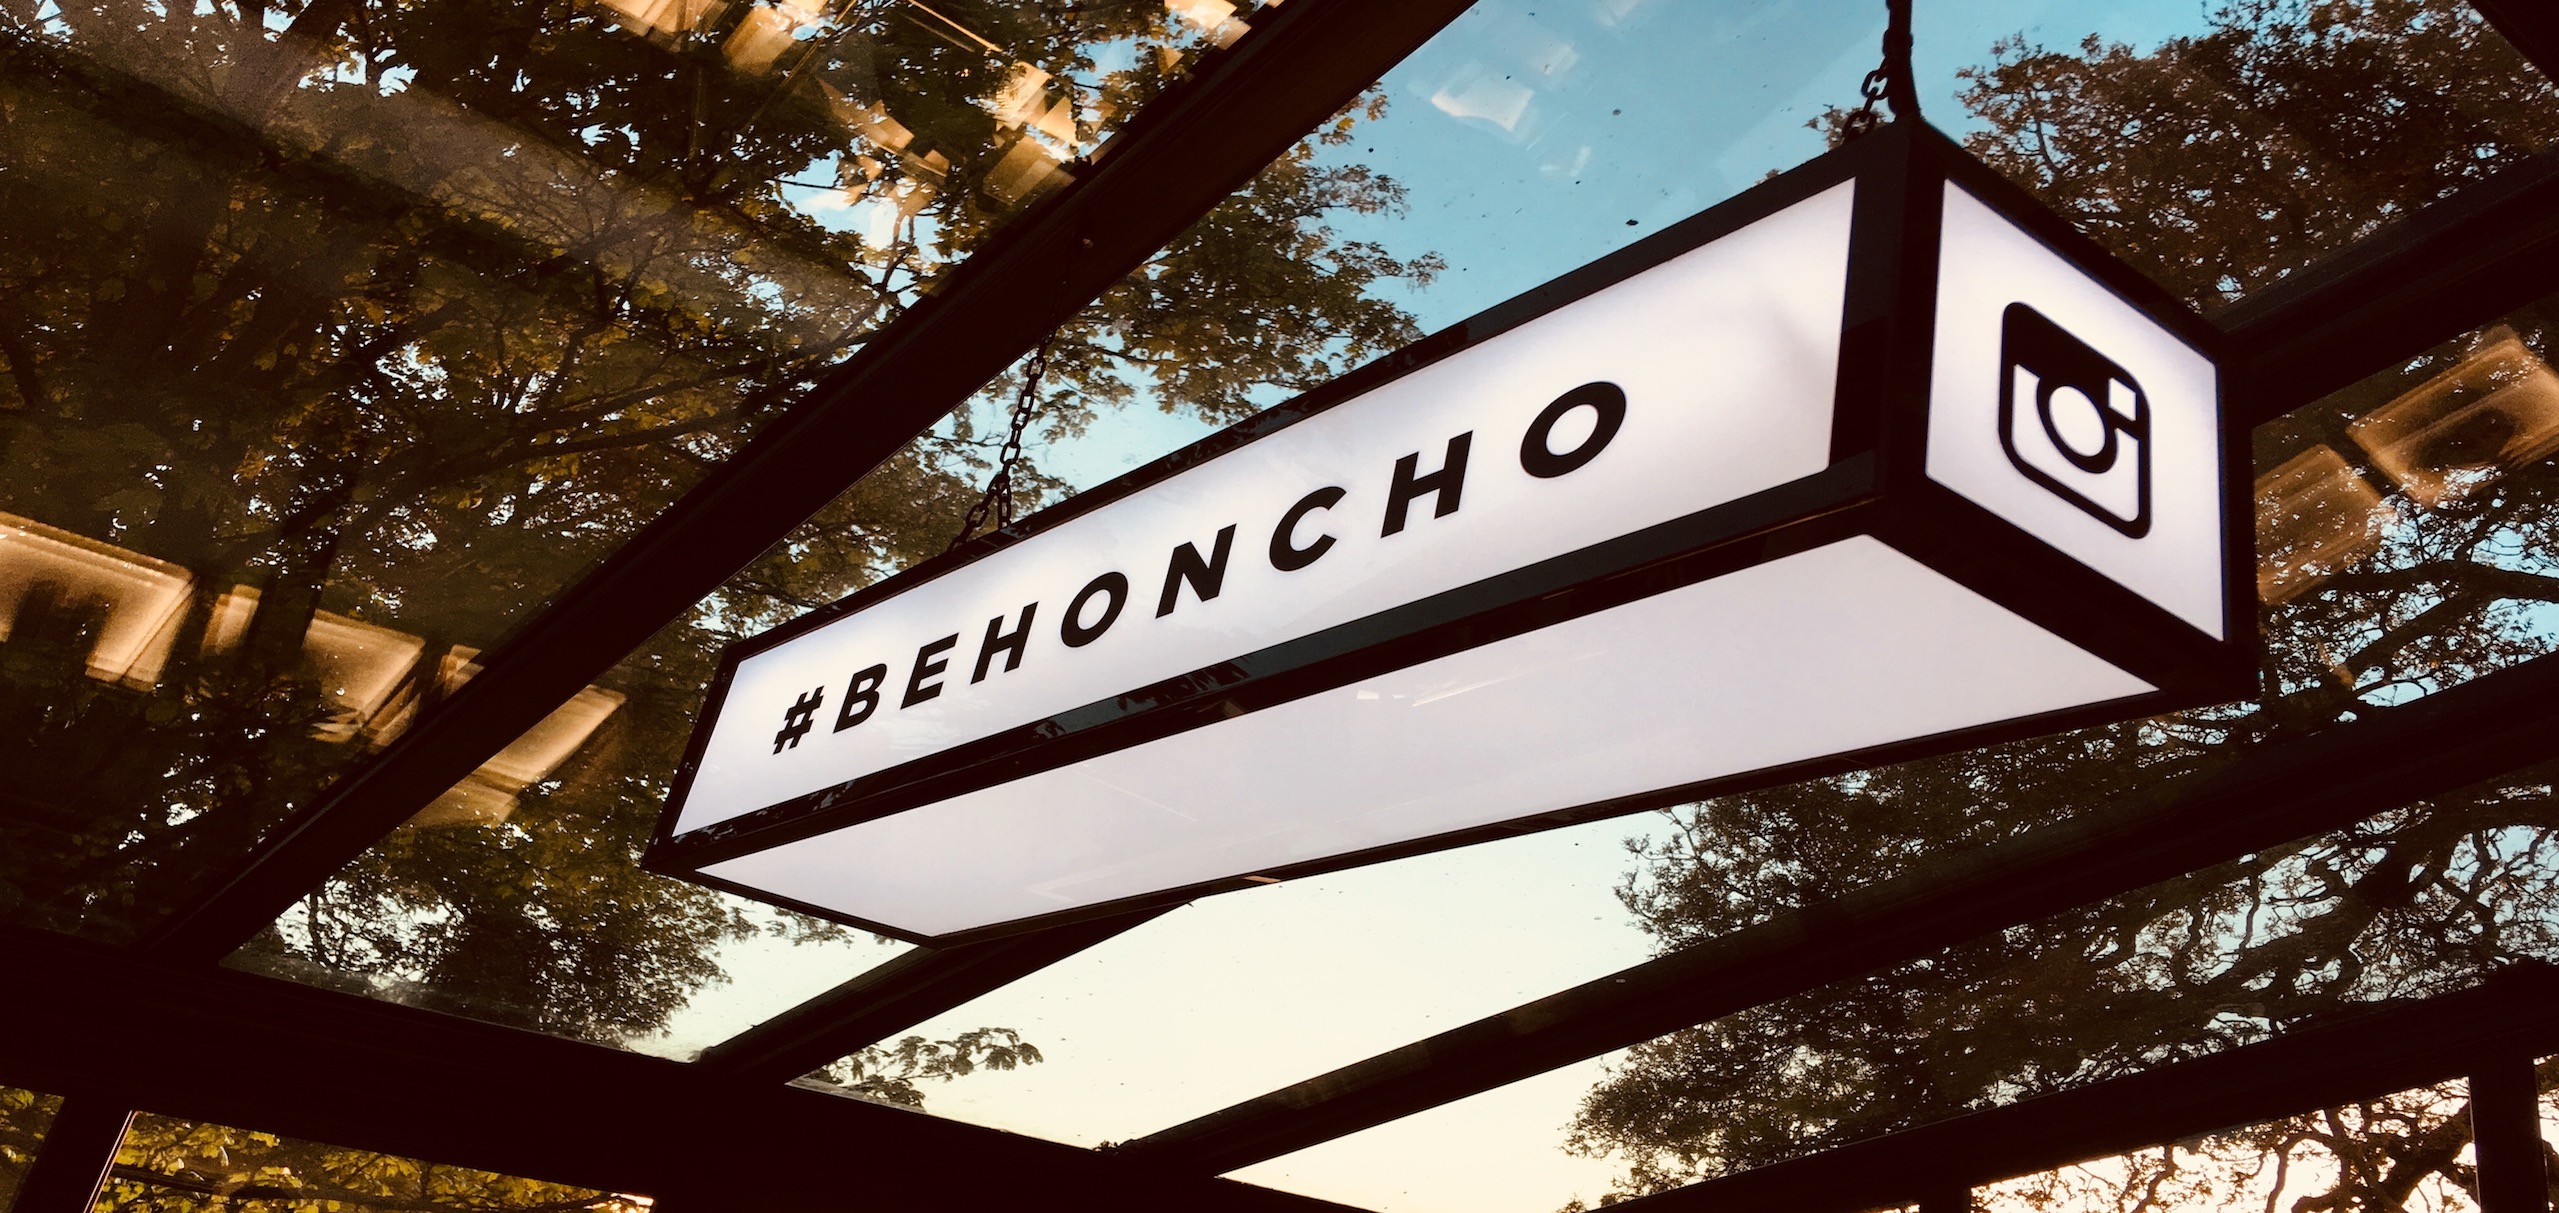 #BeHoncho